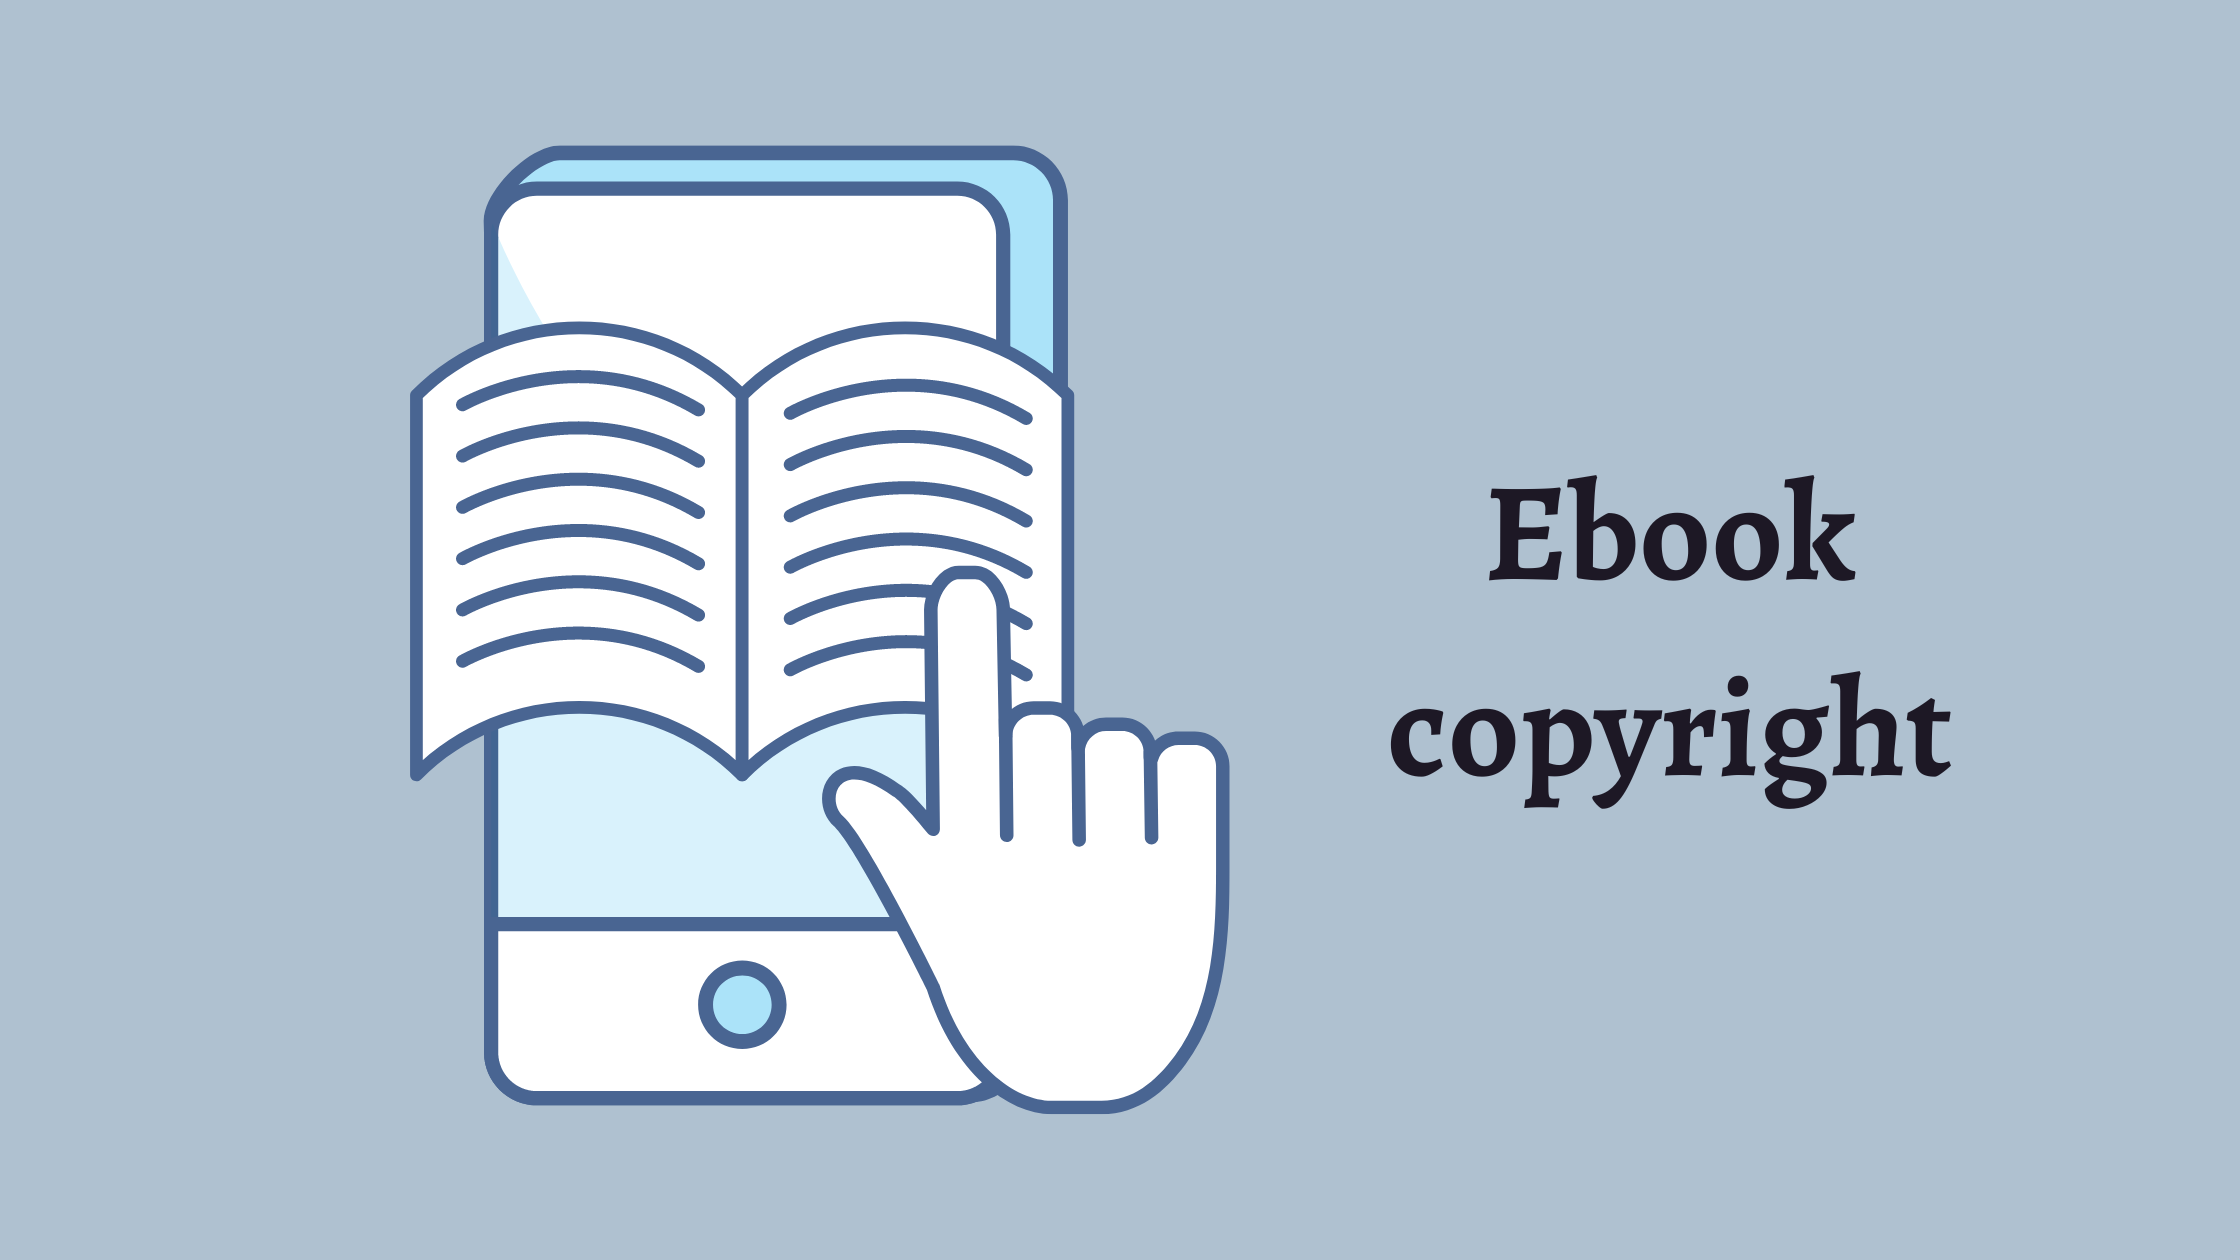 Ebook copyright